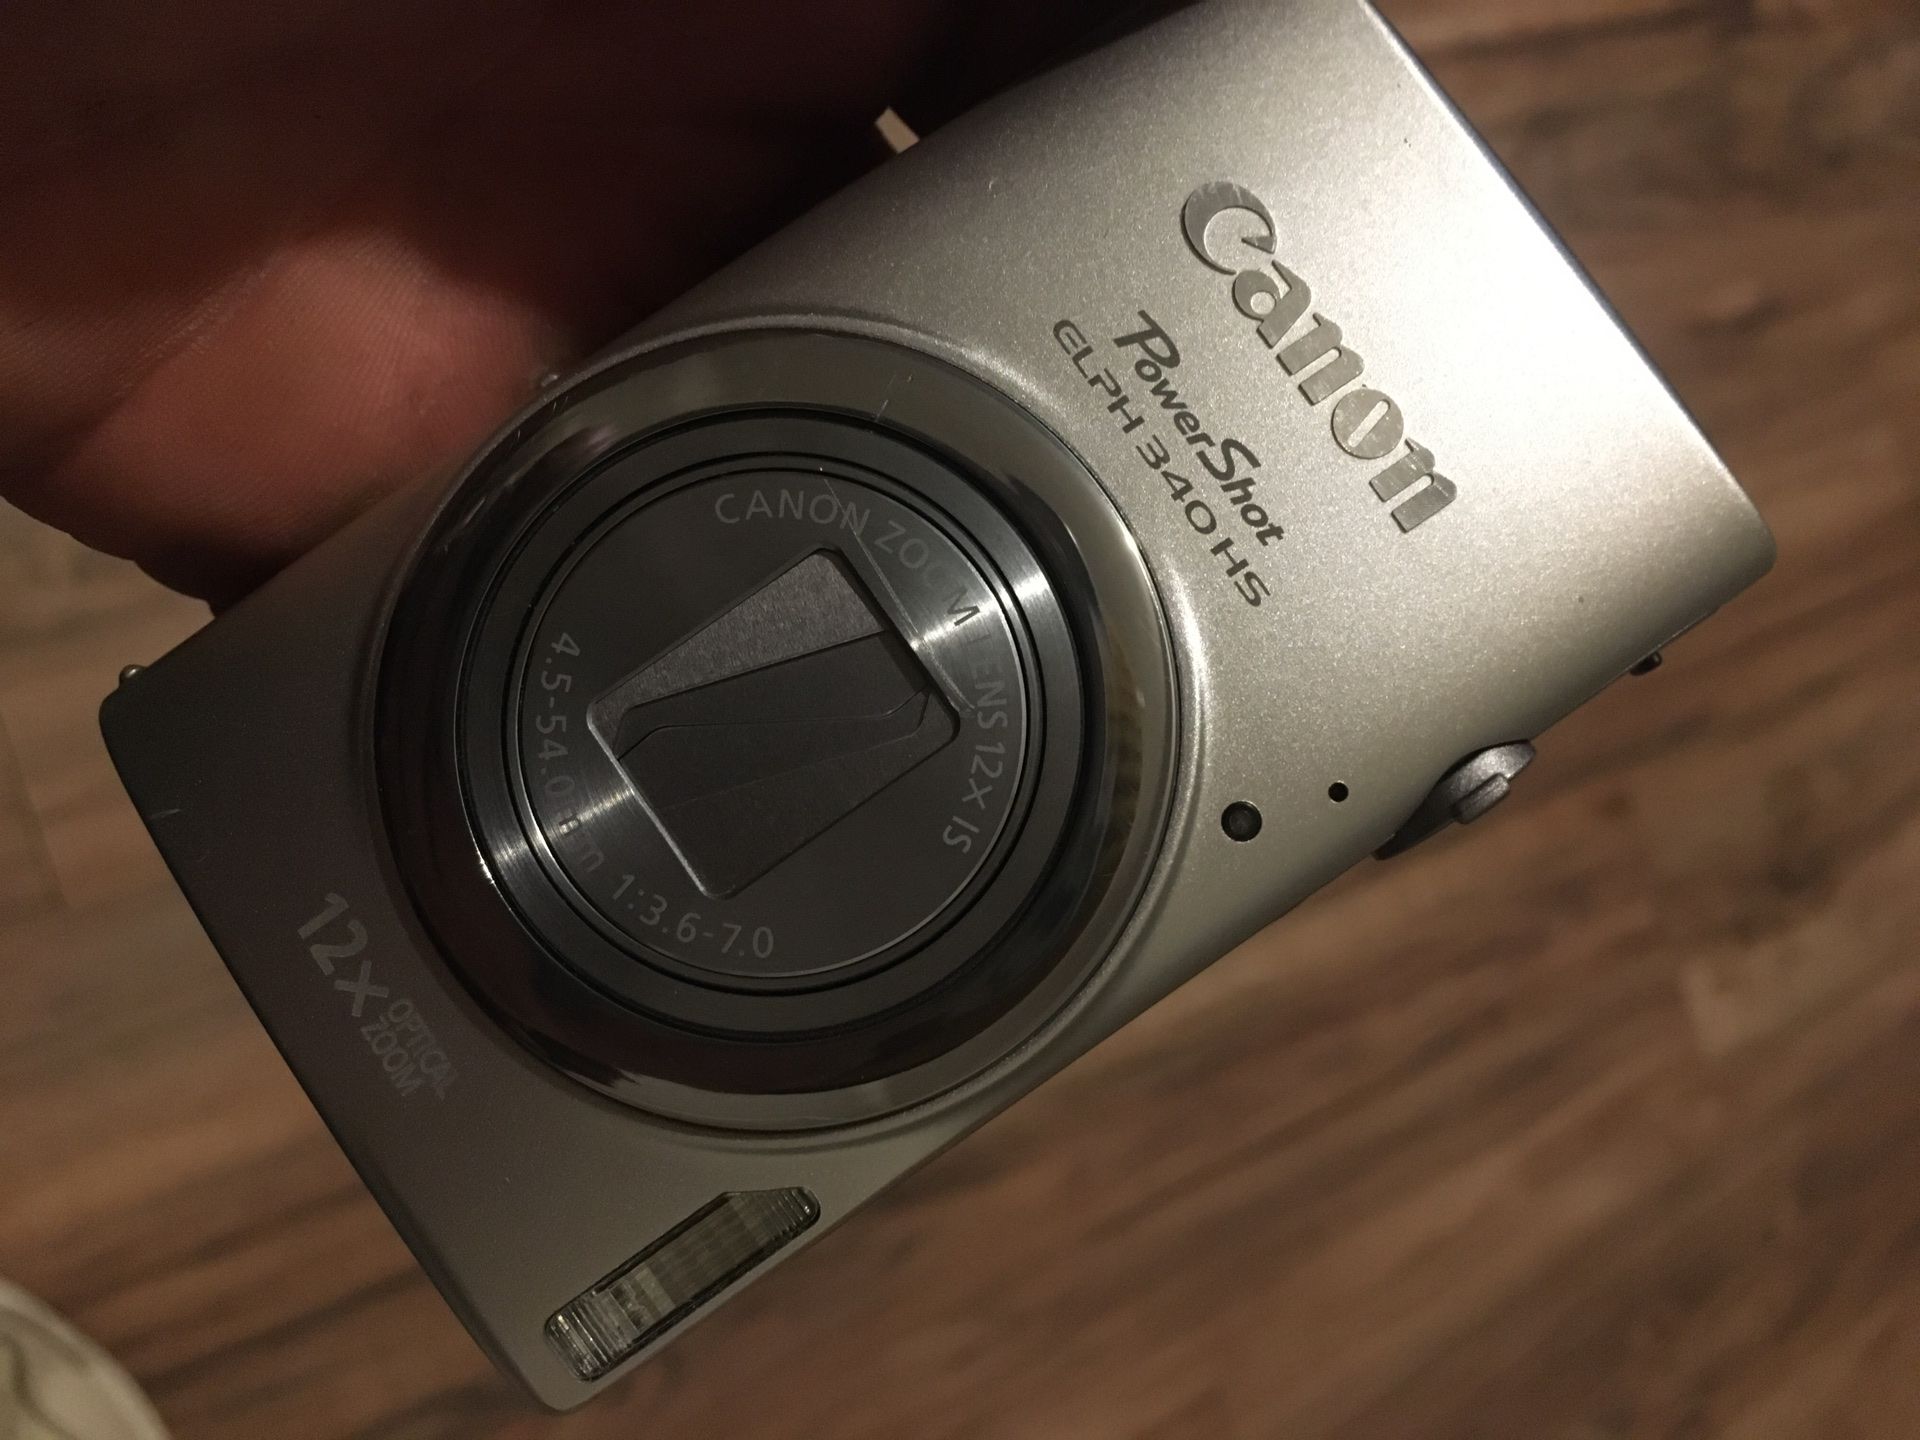 Canon power shot elph 340 hs digital camera